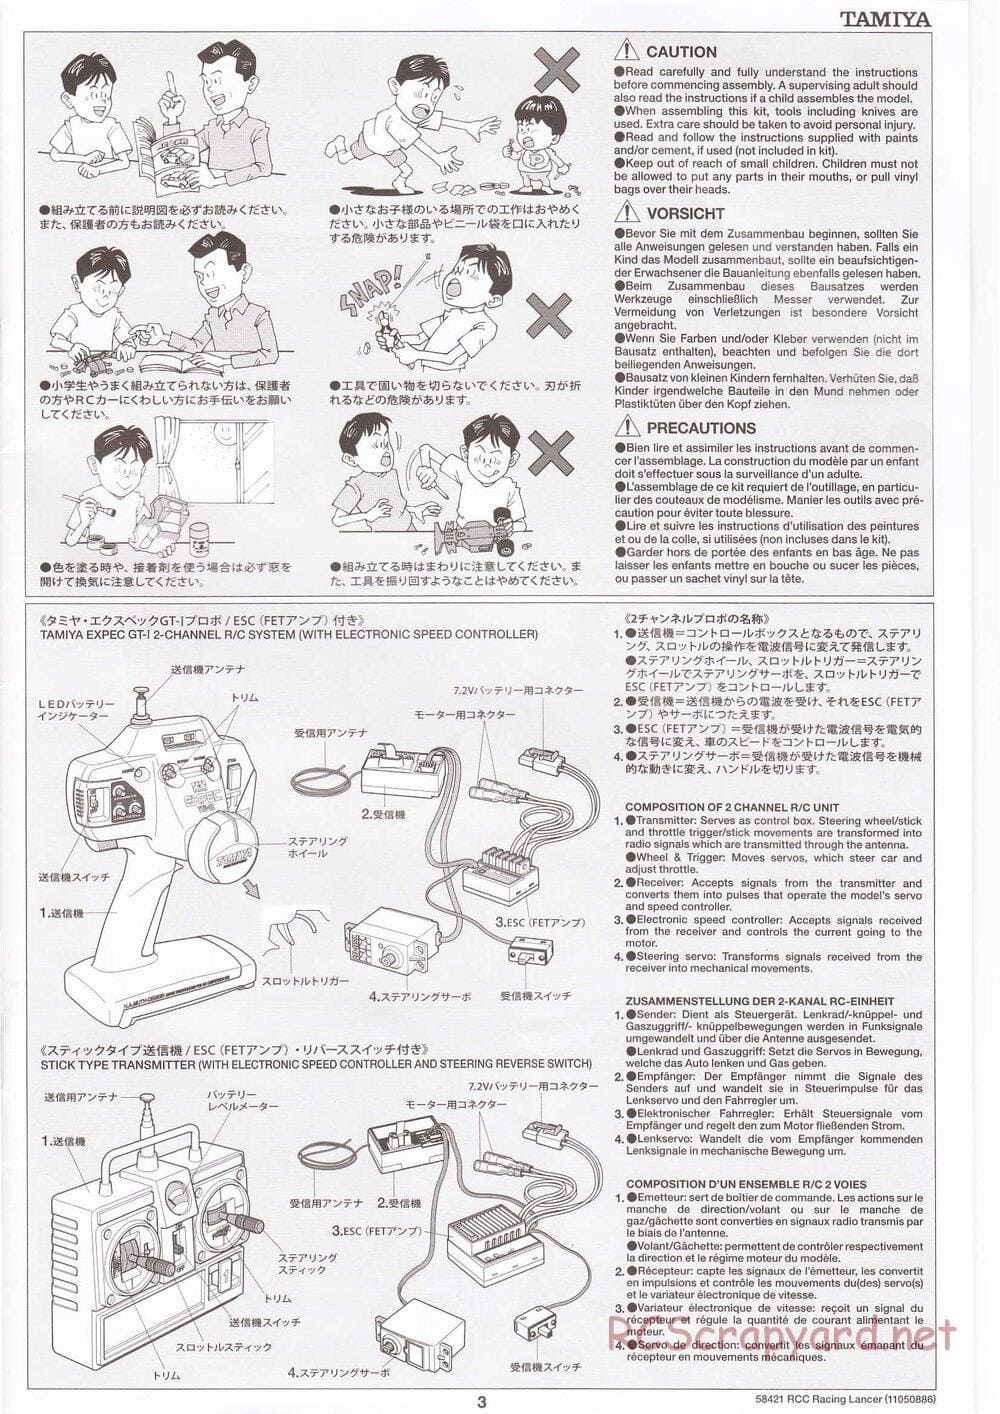 Tamiya - Mitsubishi Racing Lancer - DF-01 Chassis - Manual - Page 3